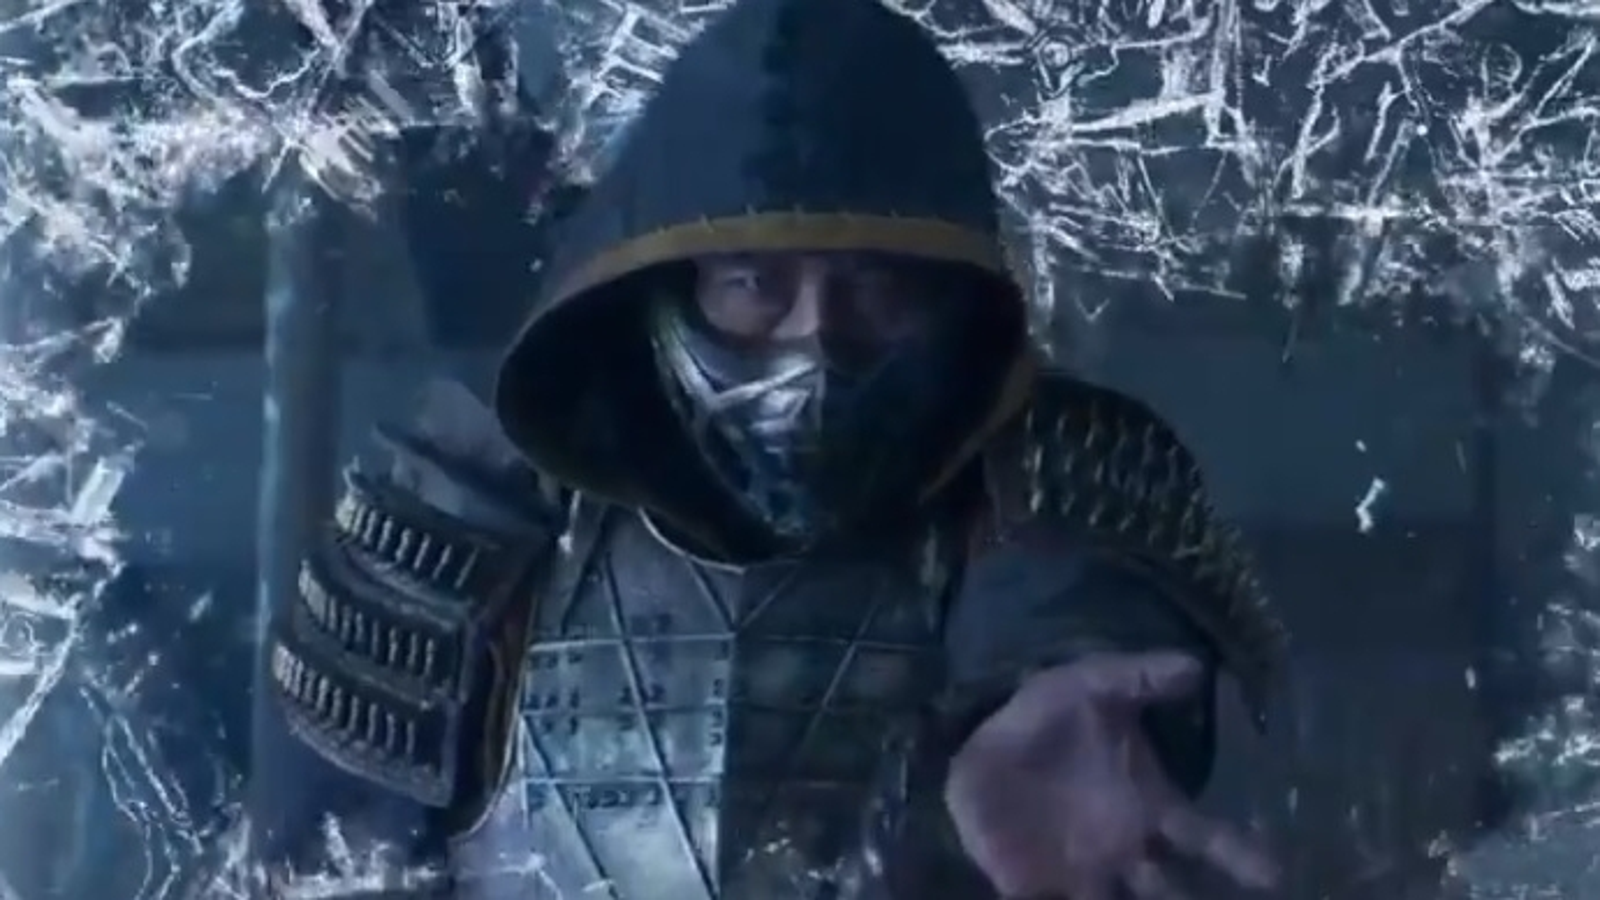 Mortal Kombat movie gets a 2021 release date